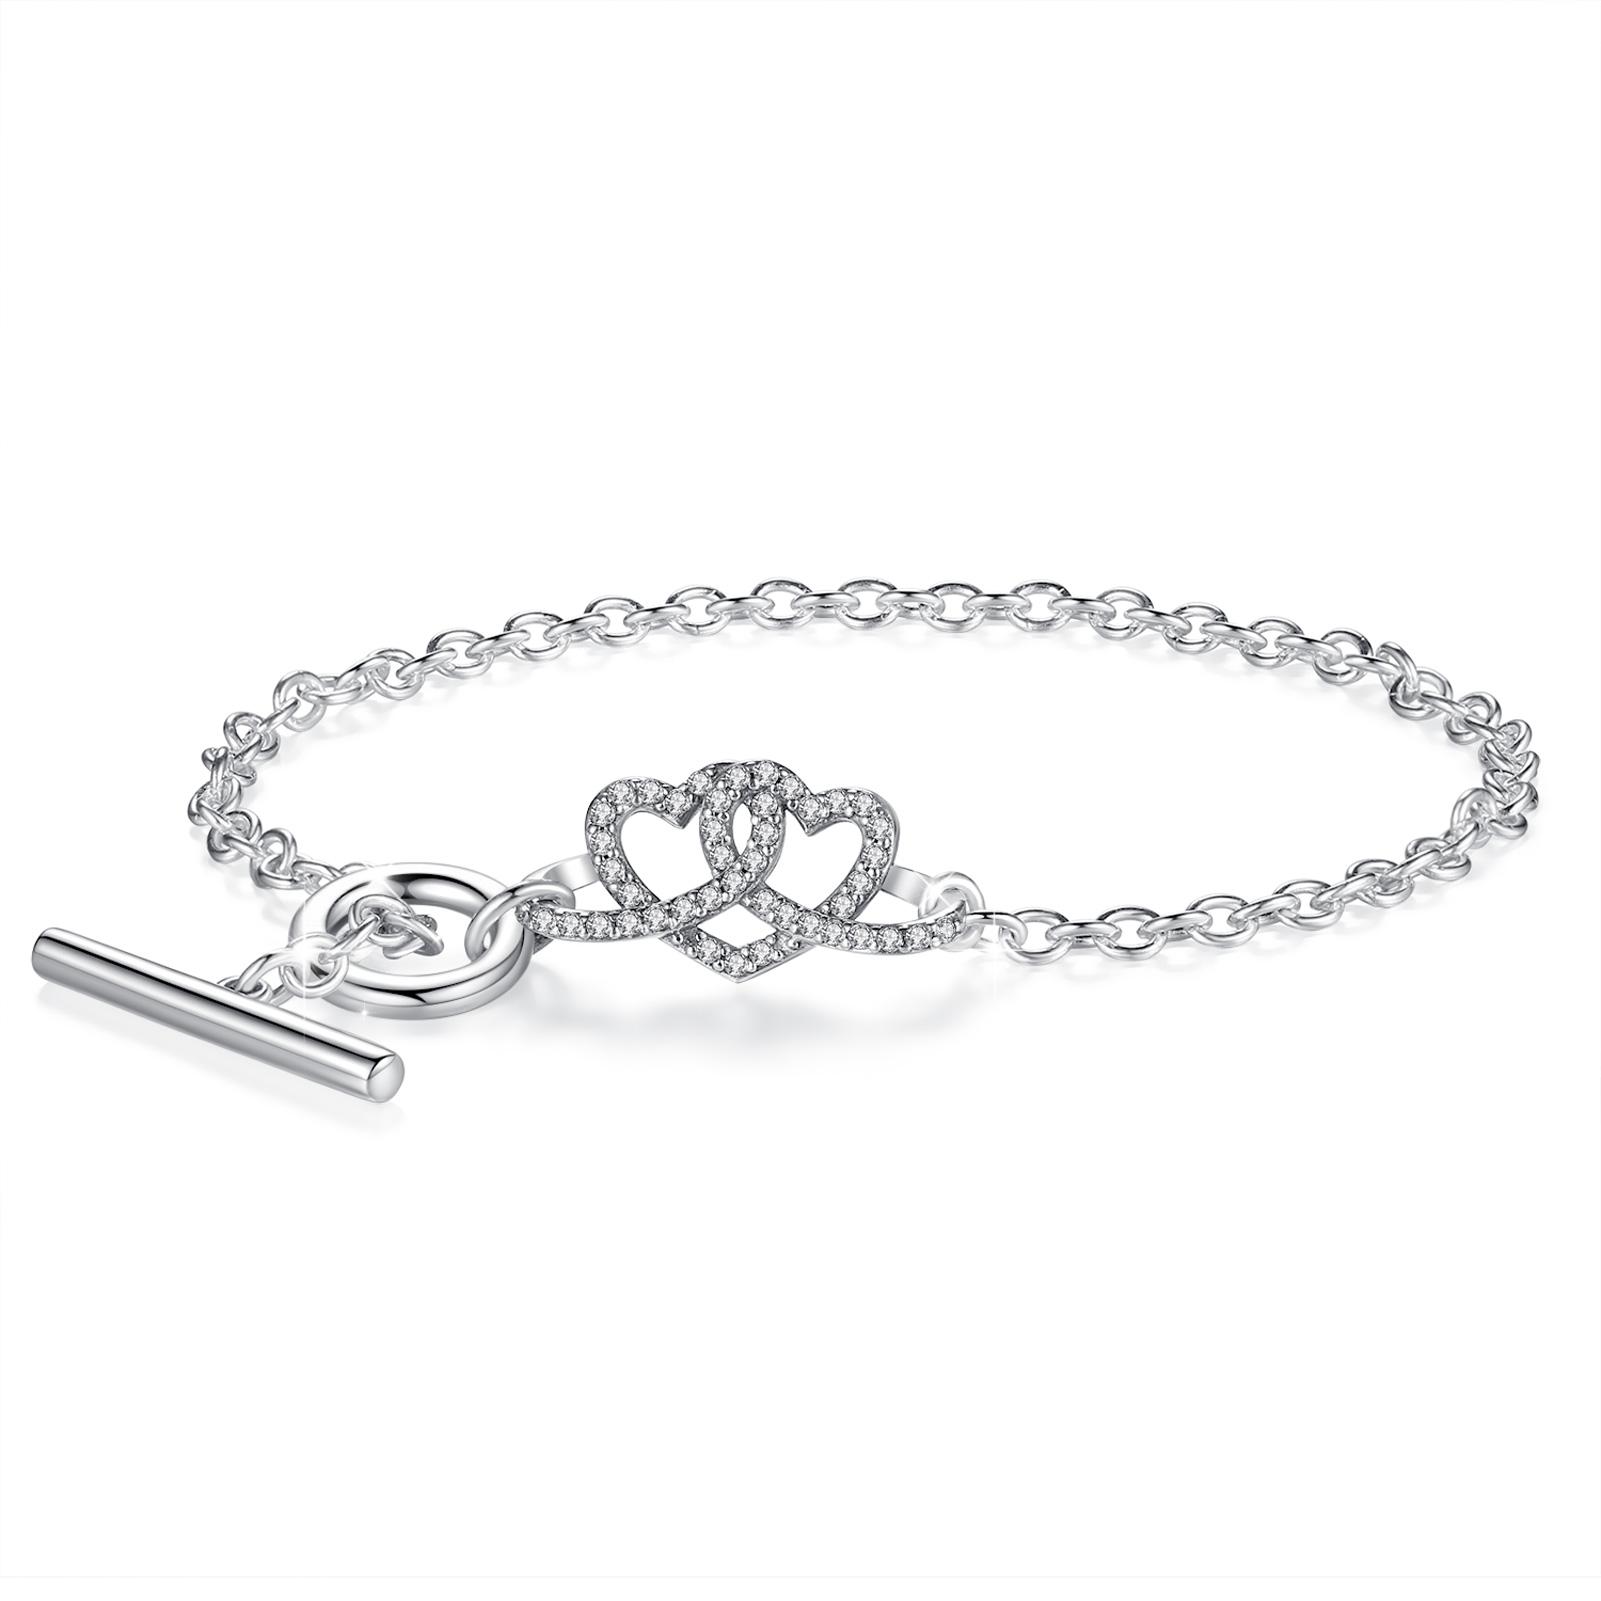 Merryshine New Arrival S925 Sterling Silver Double Heart Chain Woman Bracelet Jewelry